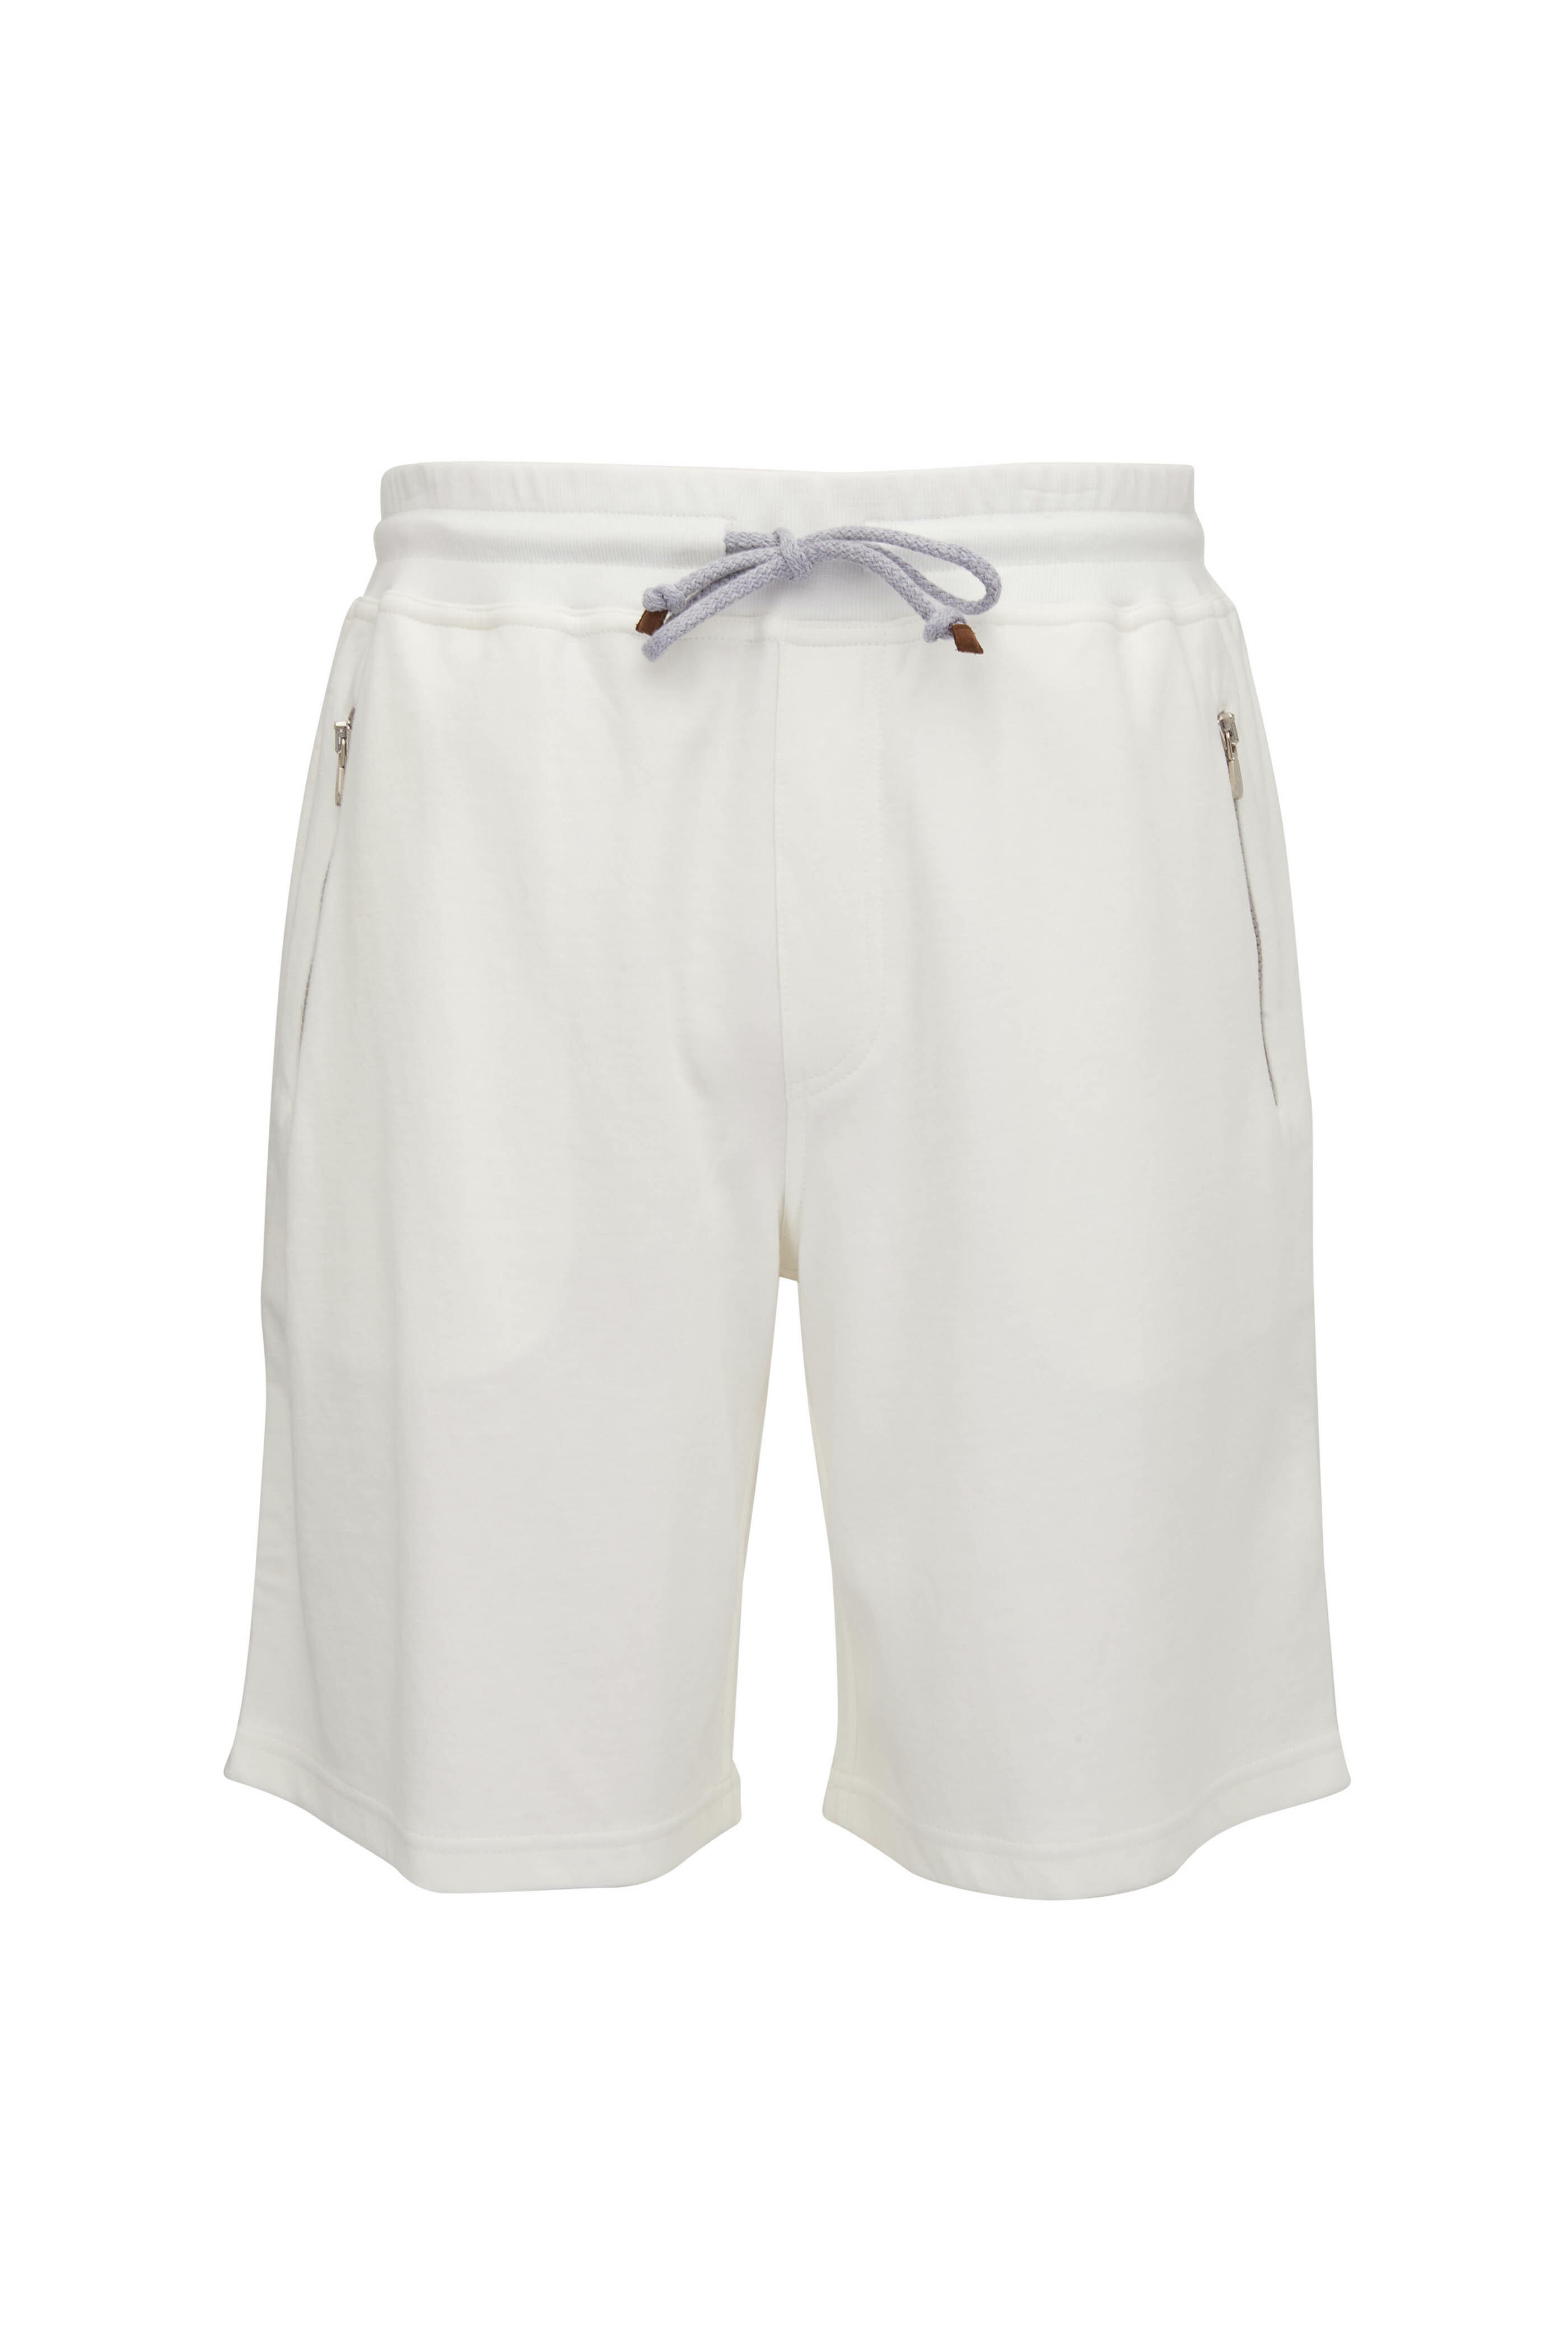 Brunello Cucinelli - White Drawstring Bermuda Shorts